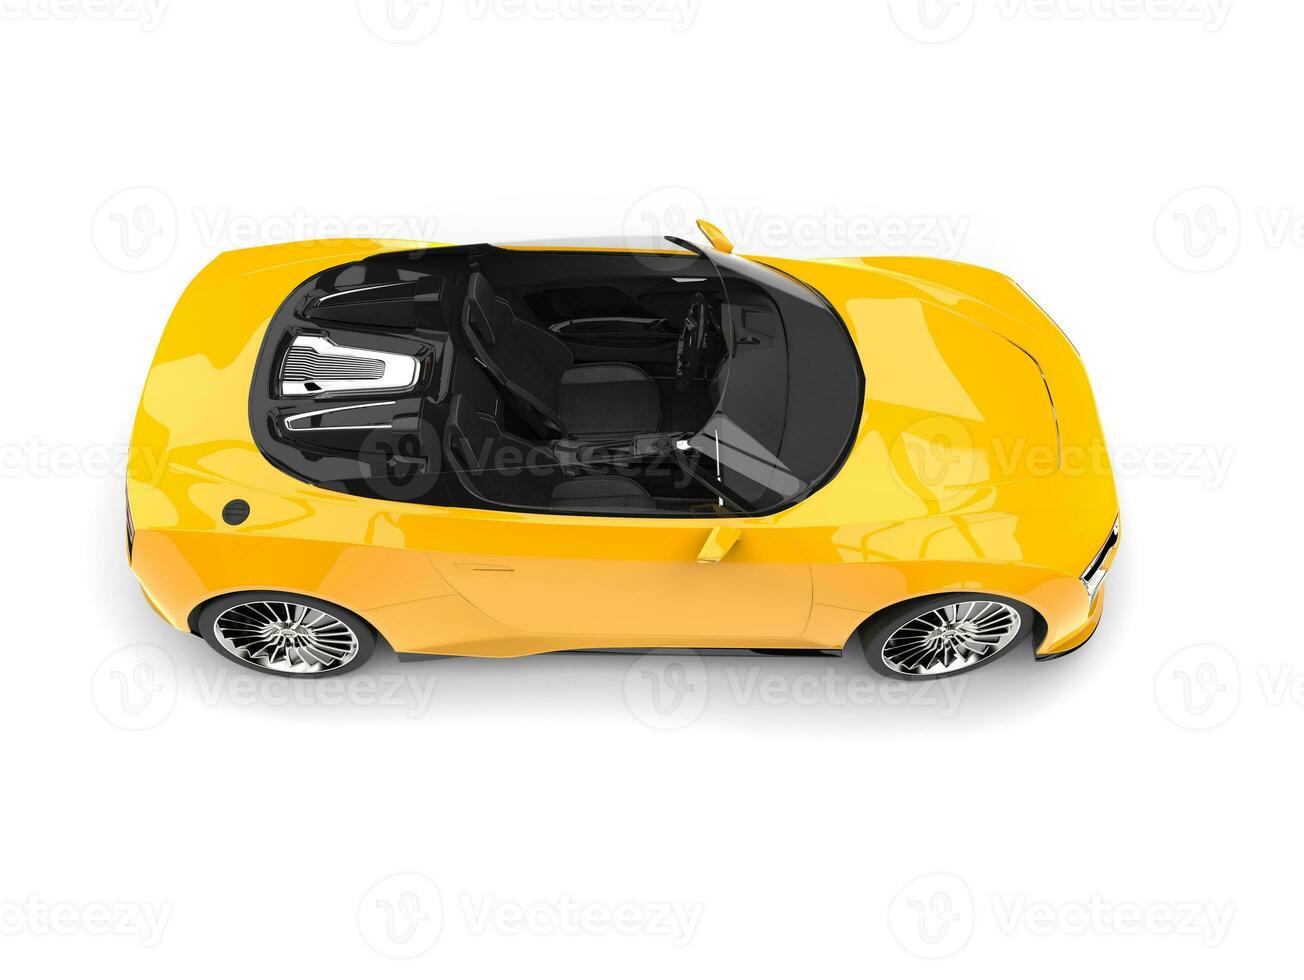 Dom amarillo moderno convertible Deportes coche - parte superior lado ver foto